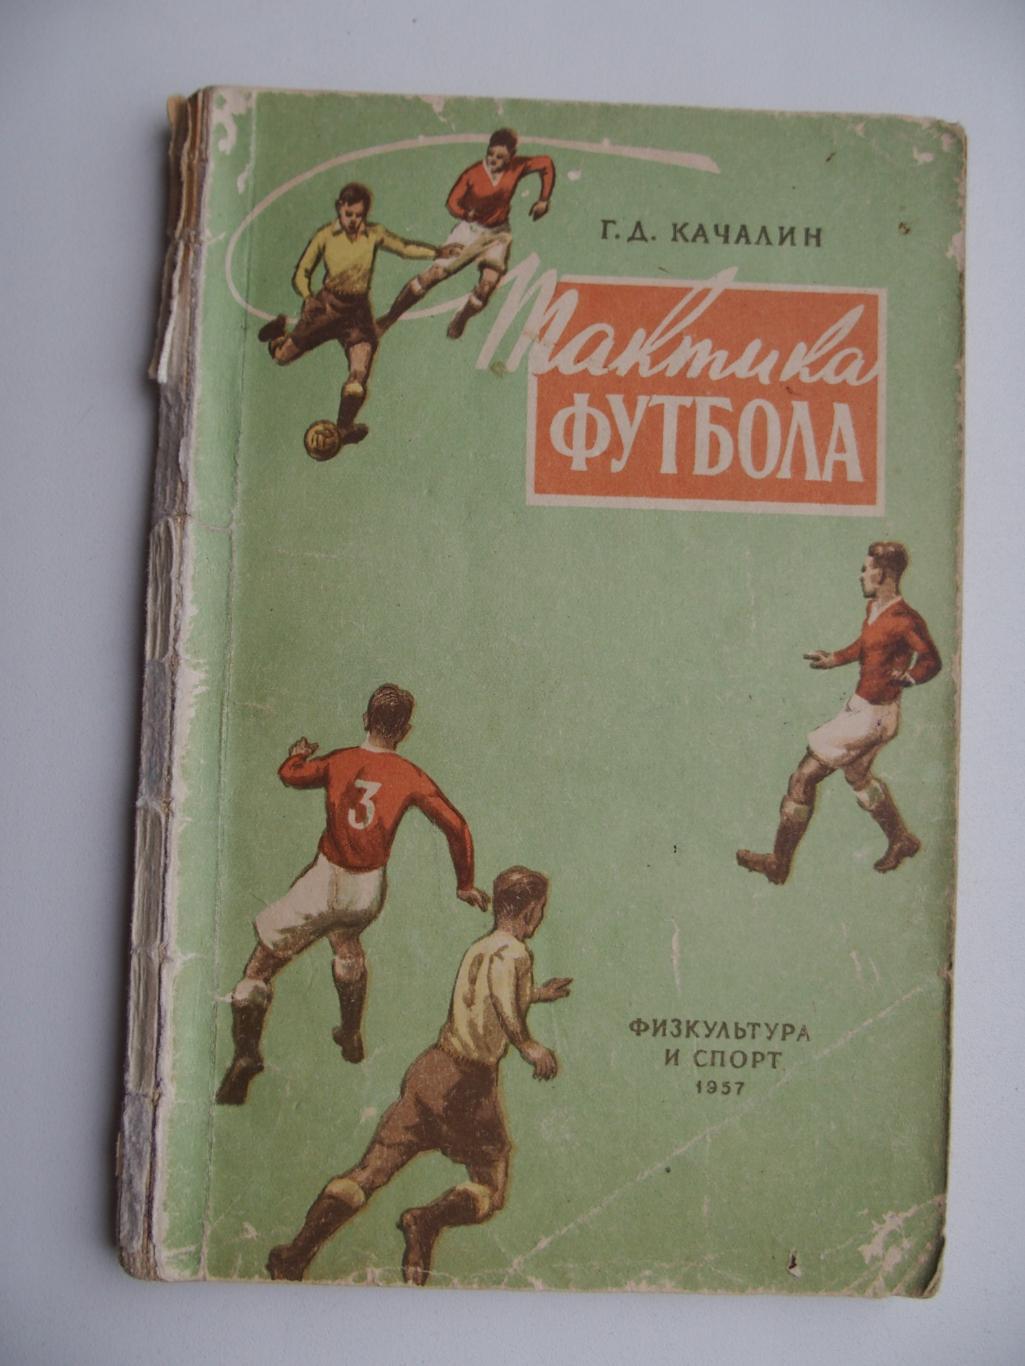 Тактика футбола. Г. Д. Качалин (1957).